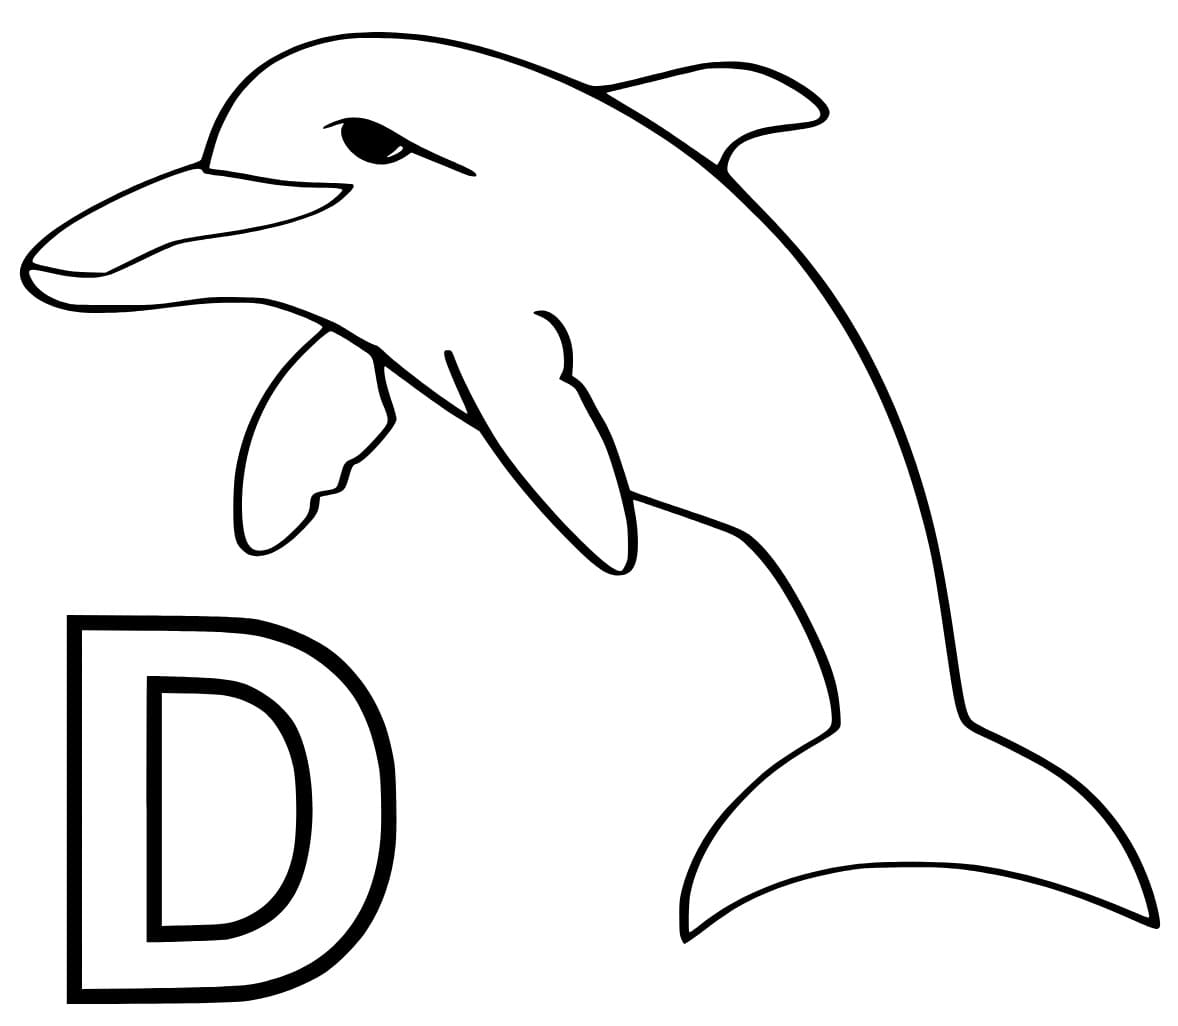 Kolorowanki Litera D jak Delfin